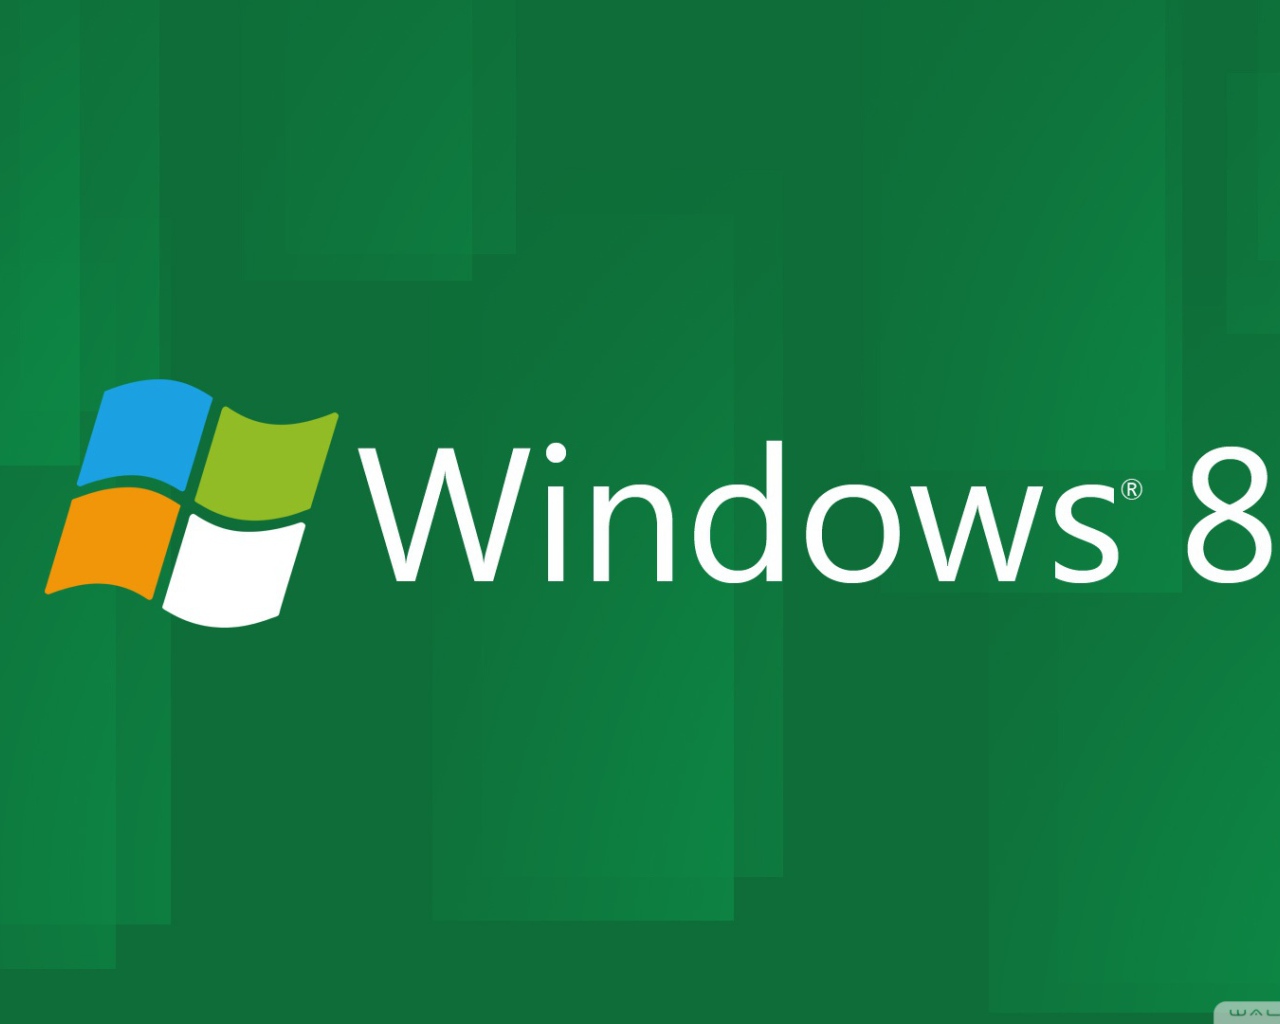 Windows 8 зеленая тема